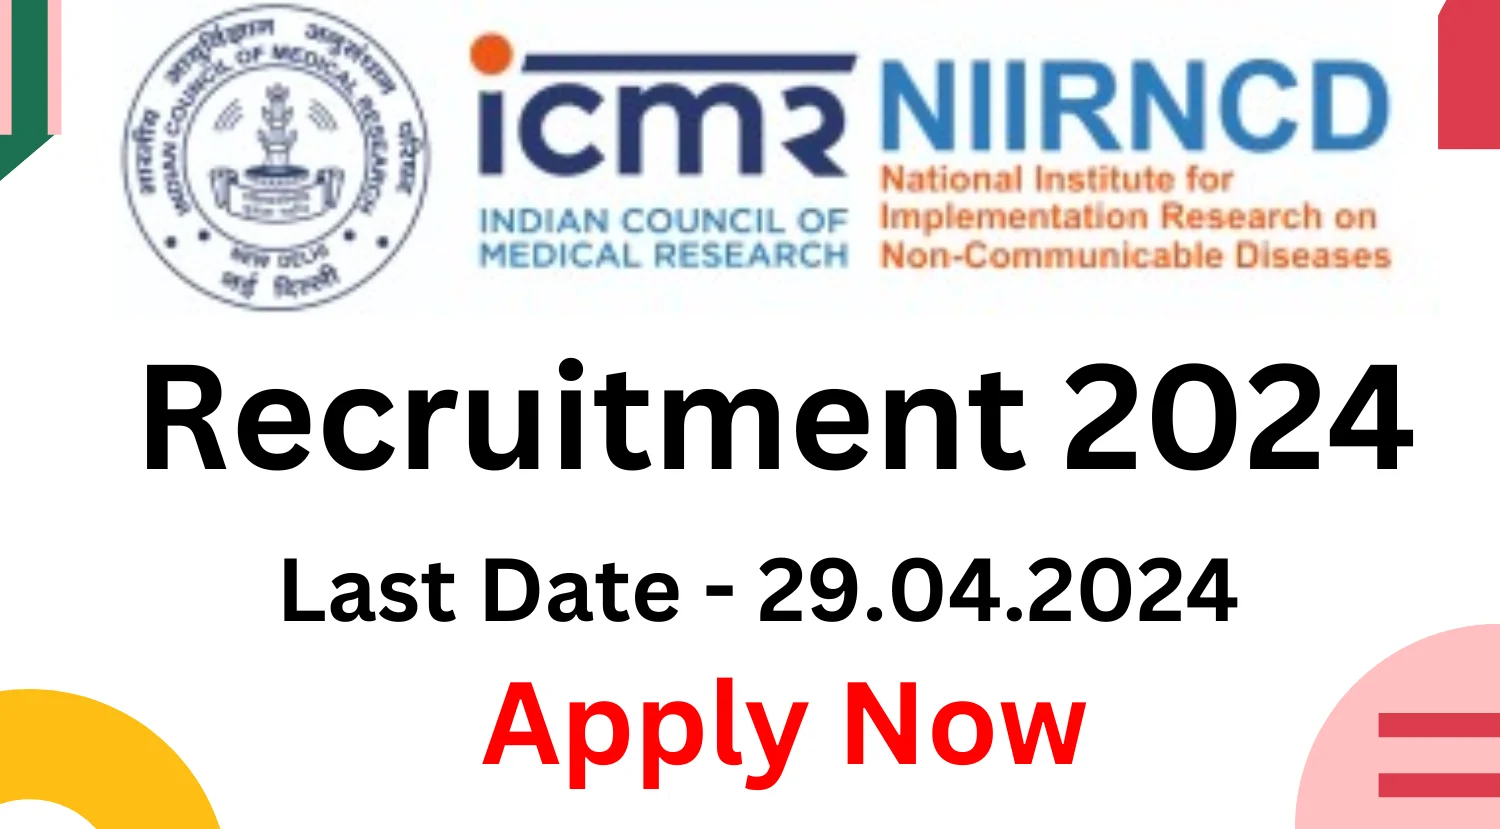 ICMR-NIIRNCD Recruitment 2024